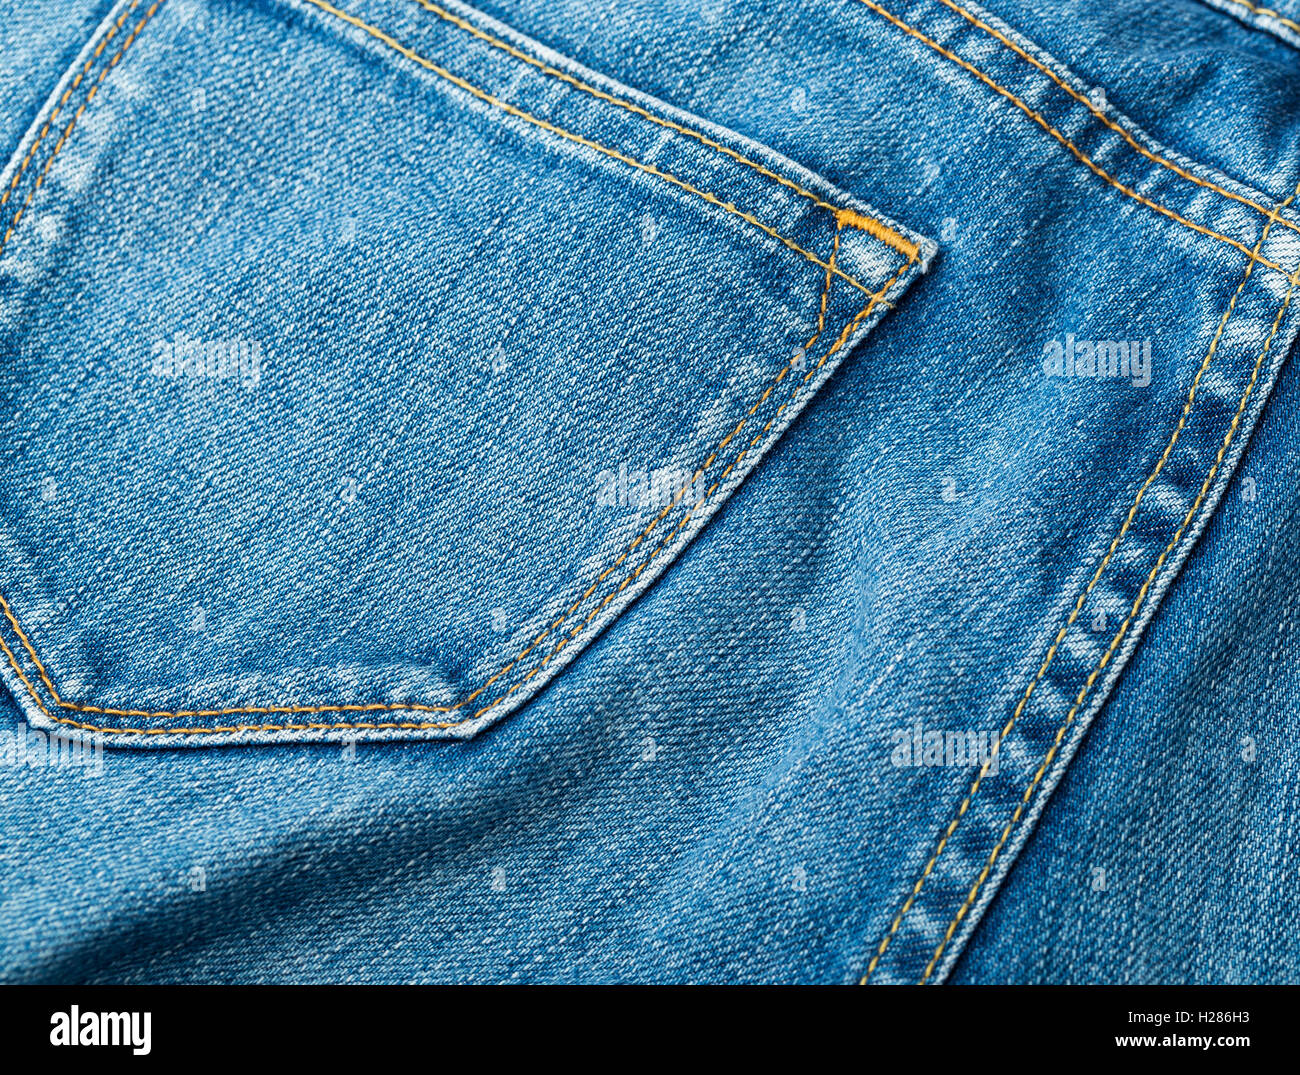 Jeans back pocket Stock Photo